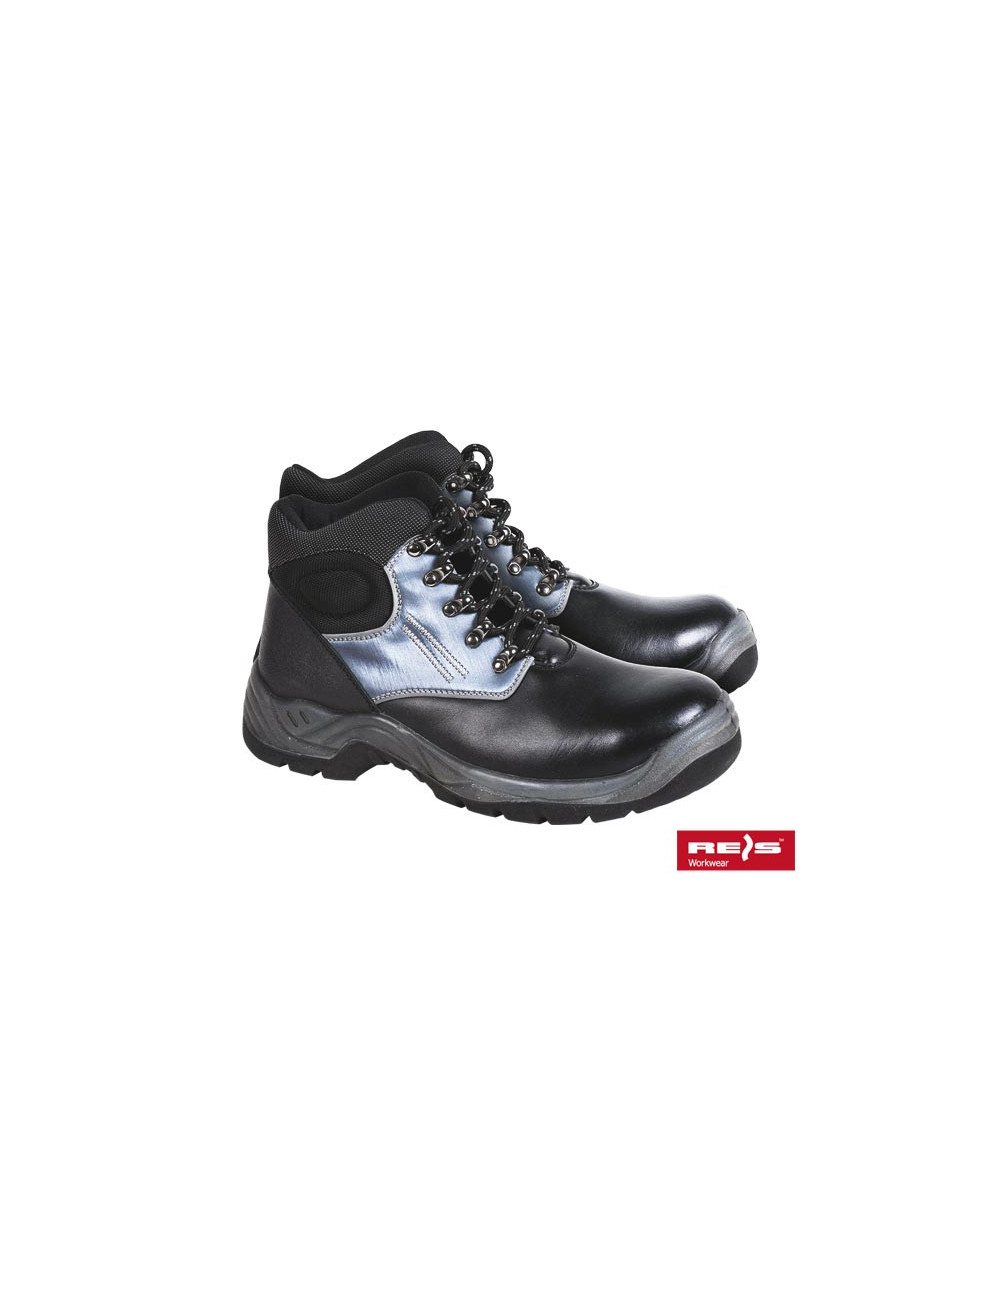 Safety shoes bs black-grey Reis Brzandreis